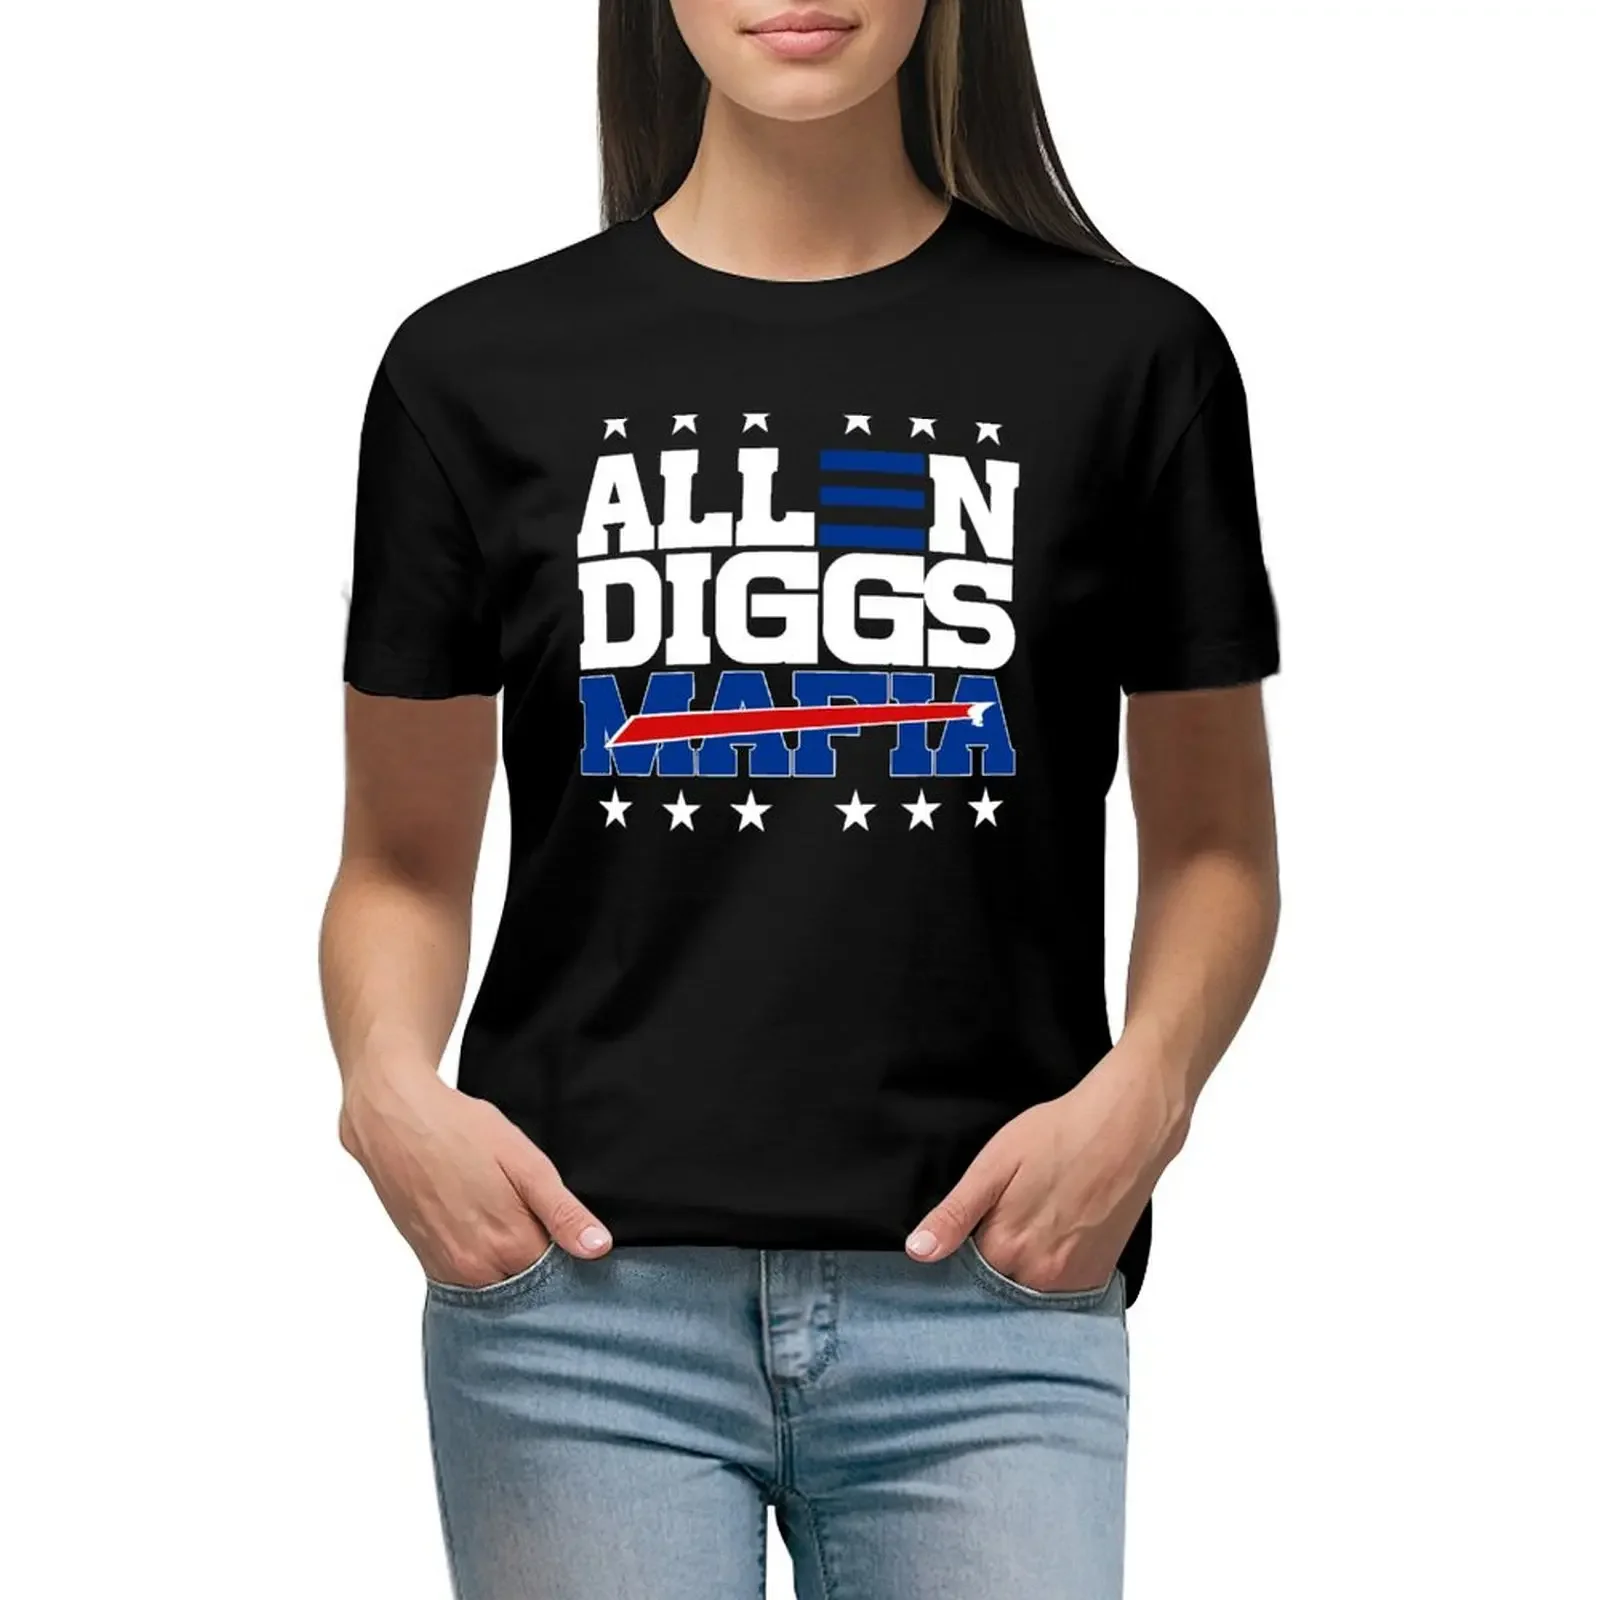 

Allen Diggs 2020 Bills mafia T-shirt korean fashion oversized summer top new edition t shirts for Women